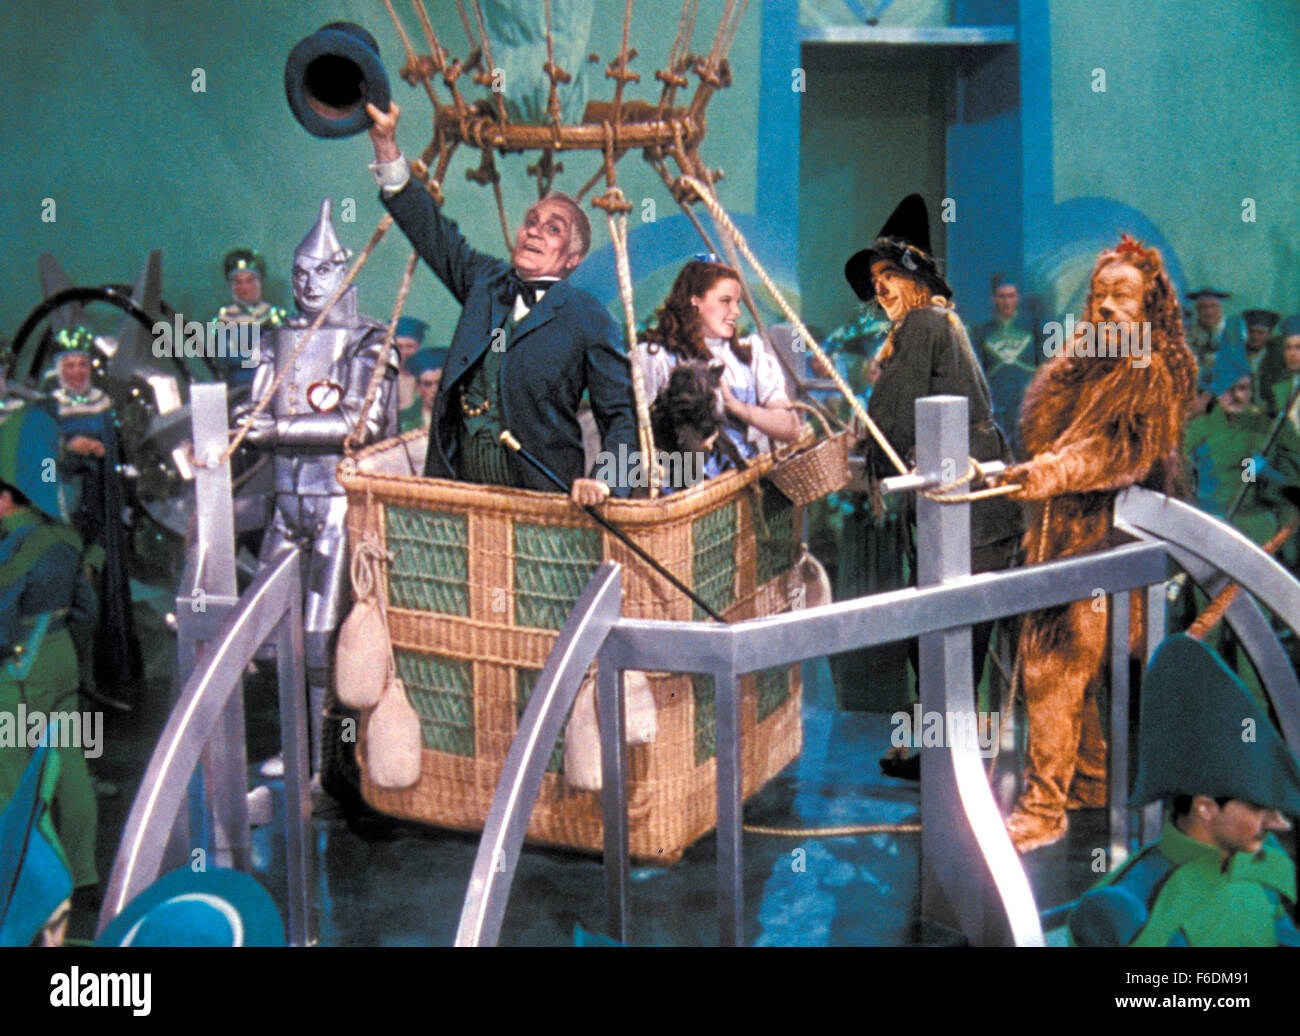 VERÖFFENTLICHT: 12. August 1939 - Film Originaltitel: The Wizard of Oz abgebildet: JACK HALEY, FRANK MORGAN, JUDY GARLAND, Strahl BOLGER, BERT LAHR. Stockfoto